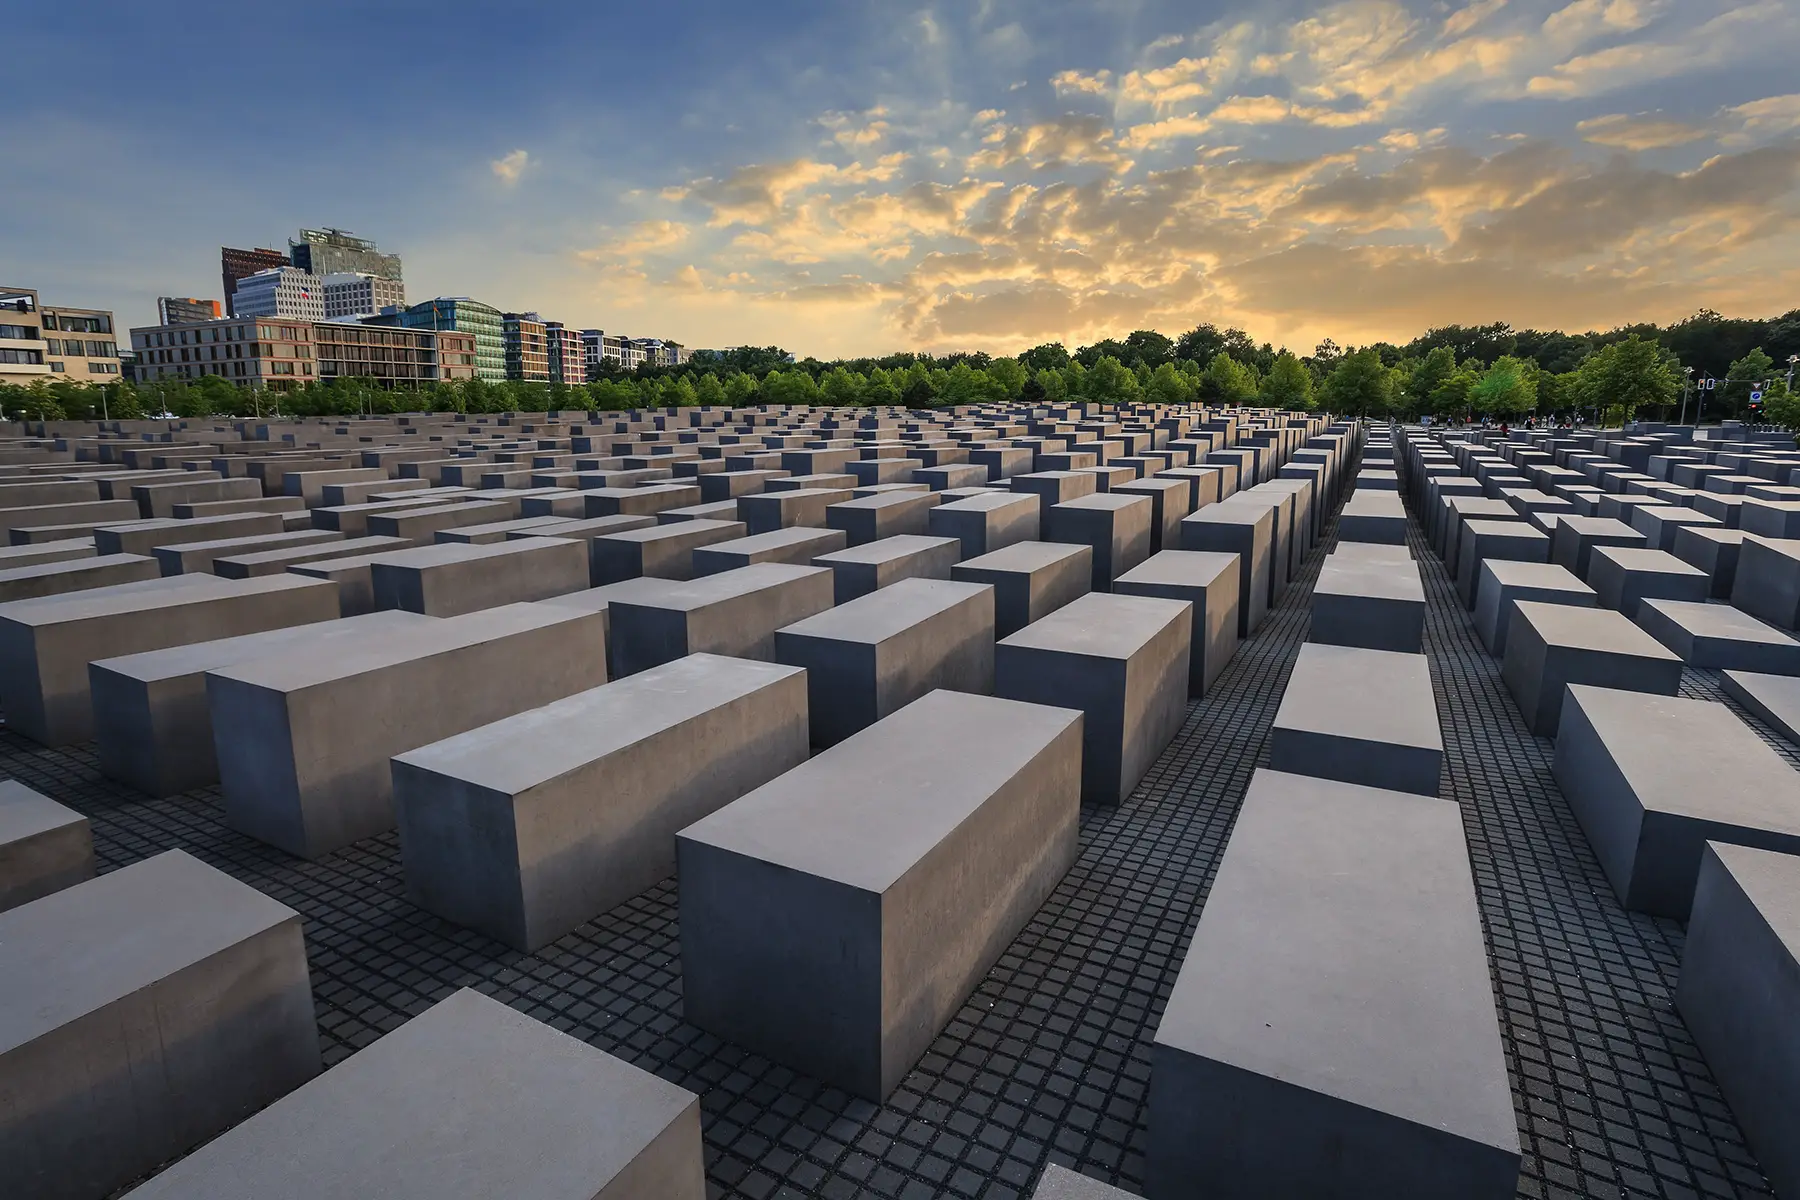 The Berlin Holocaust Memorial at sunrise